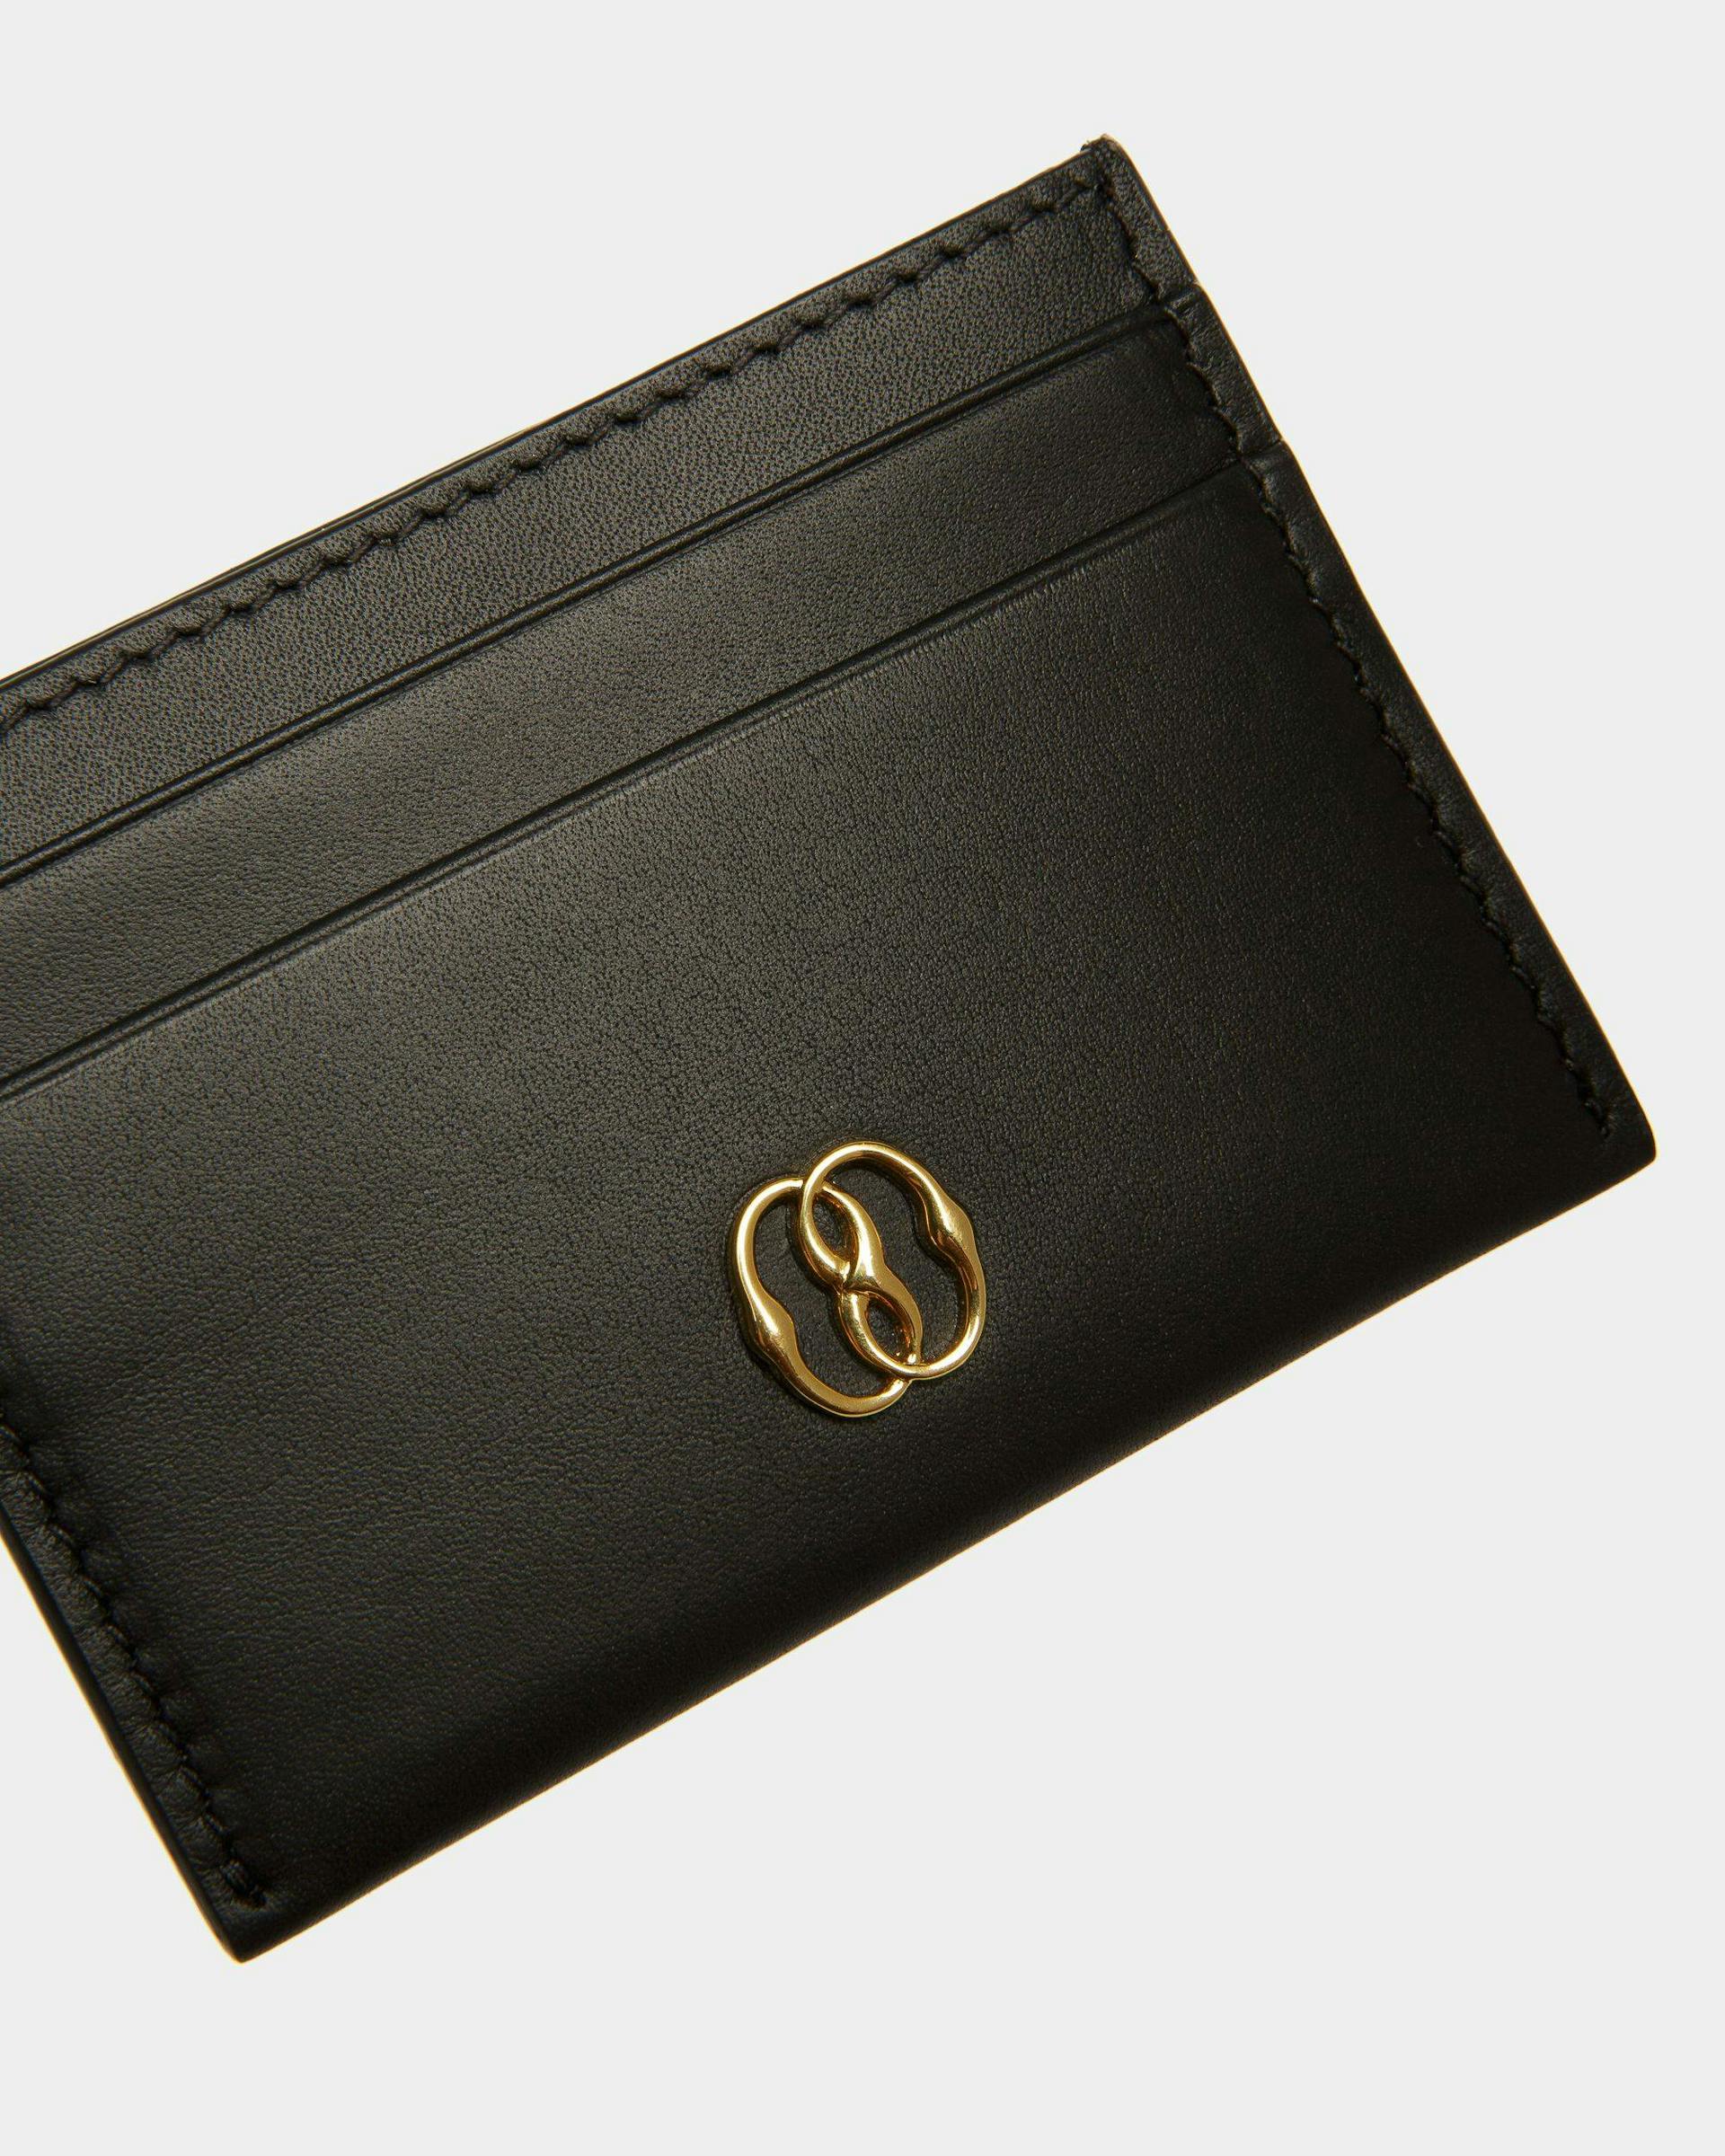 Women's Emblem Card Holder In Black Leather | Bally | Still Life Detail